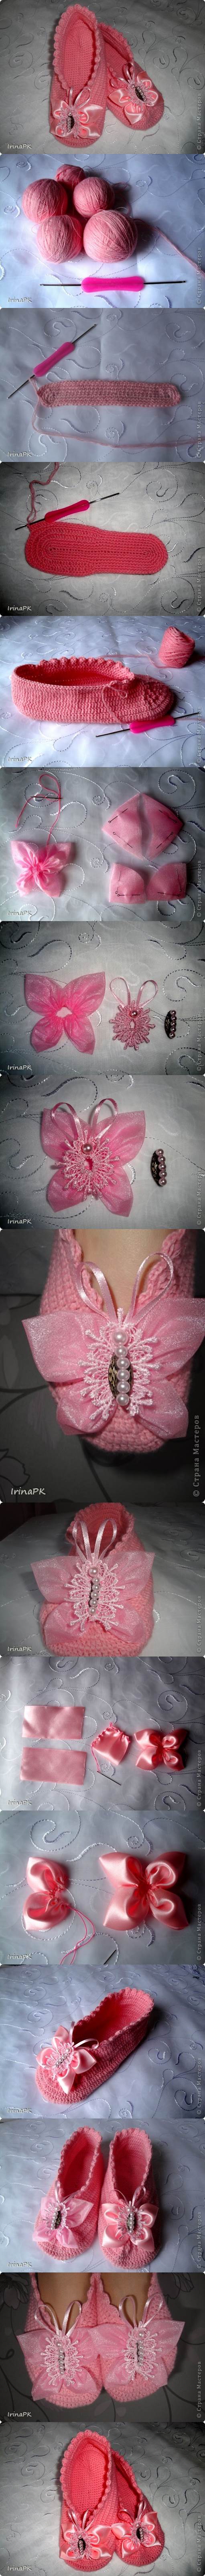 DIY-Crochet-Slippers-with-Ribbon-Butterflies-2